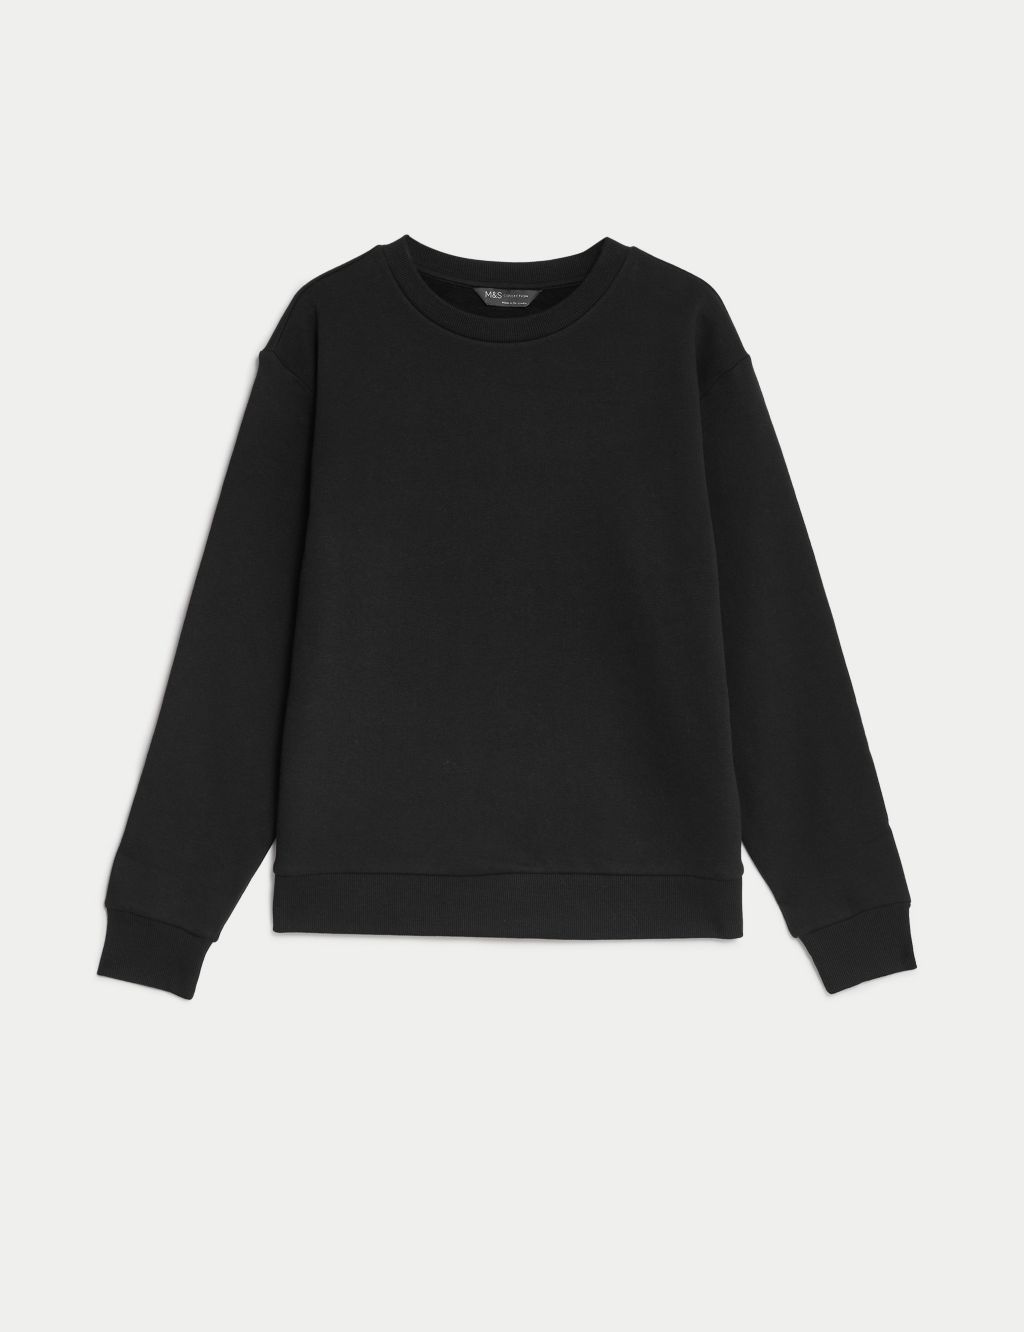 Cotton Rich Crew Neck Sweatshirt | M&S Collection | M&S